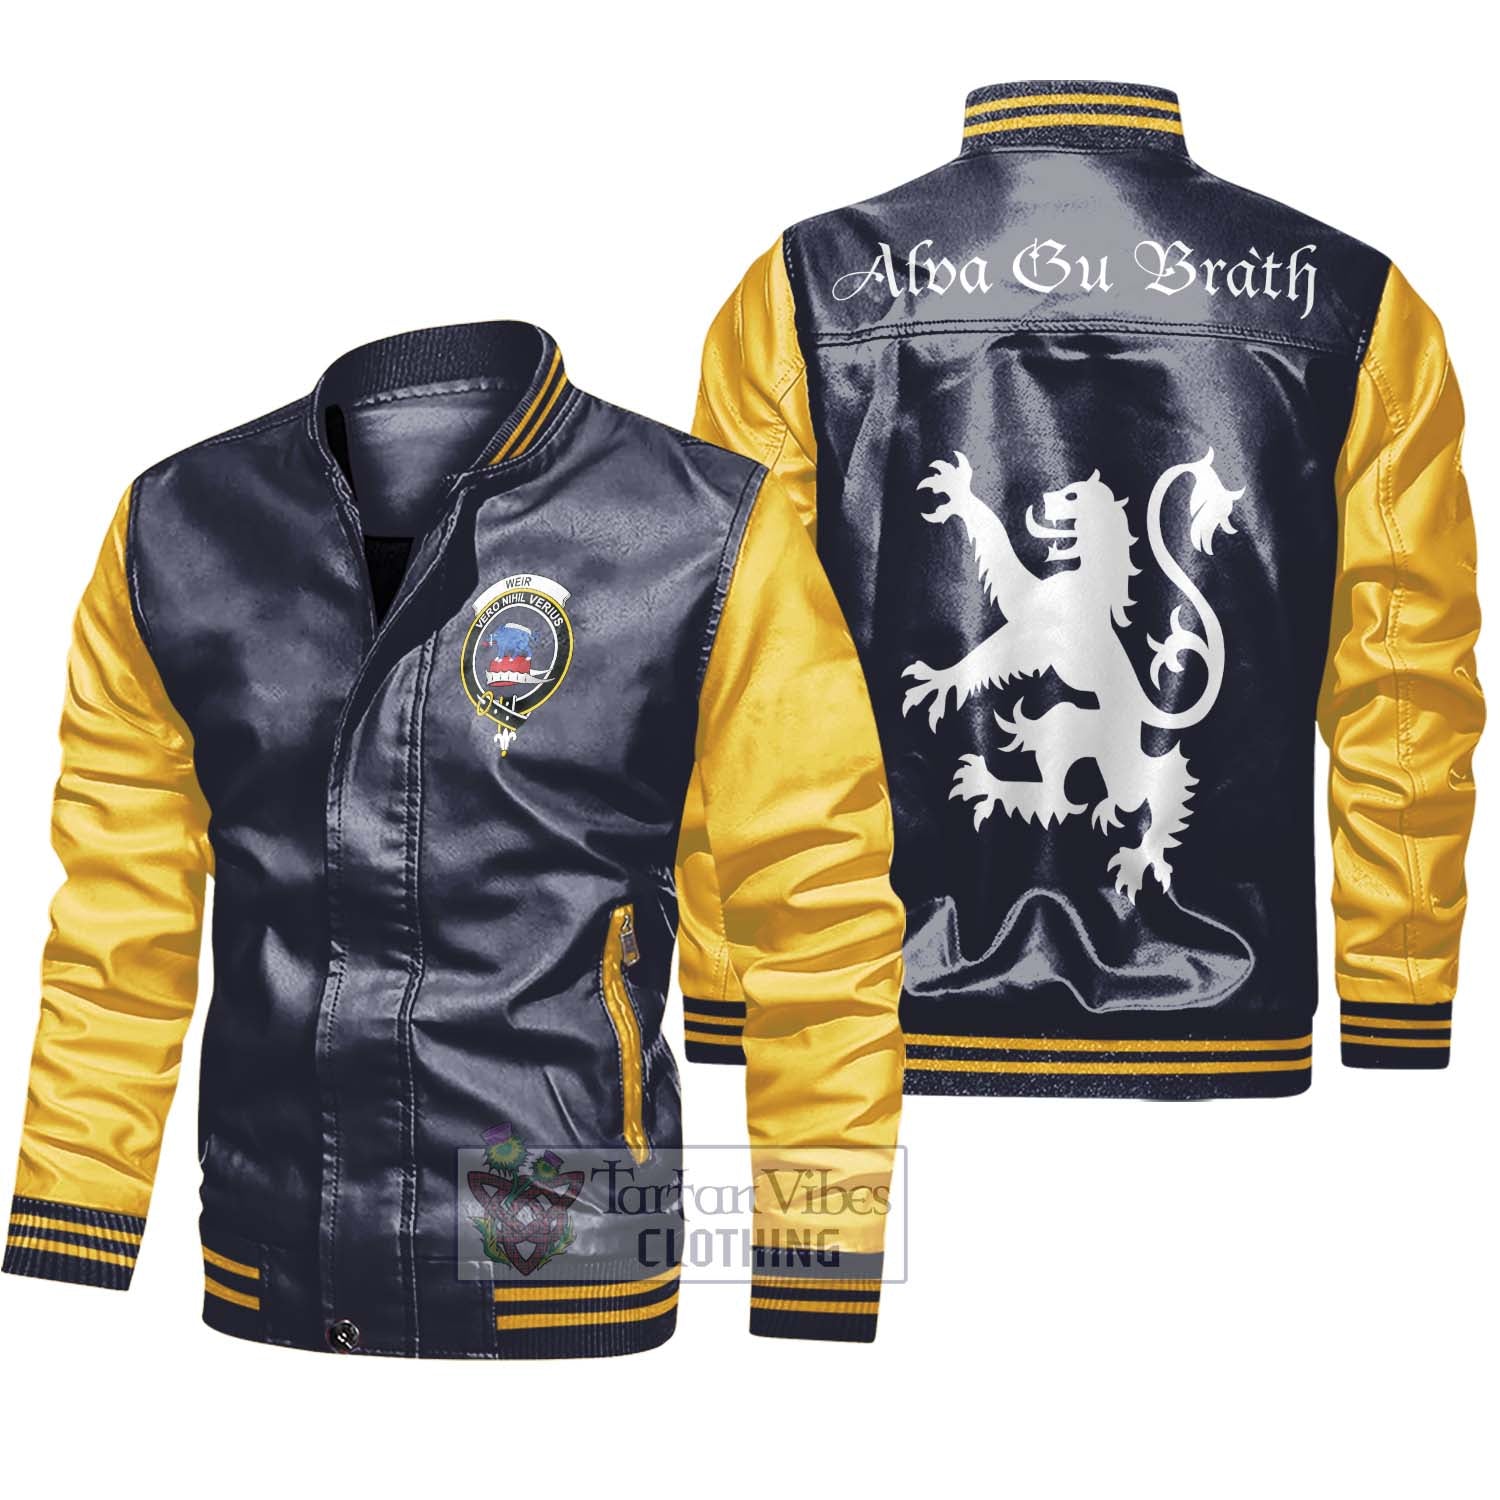 Tartan Vibes Clothing Weir Family Crest Leather Bomber Jacket Lion Rampant Alba Gu Brath Style